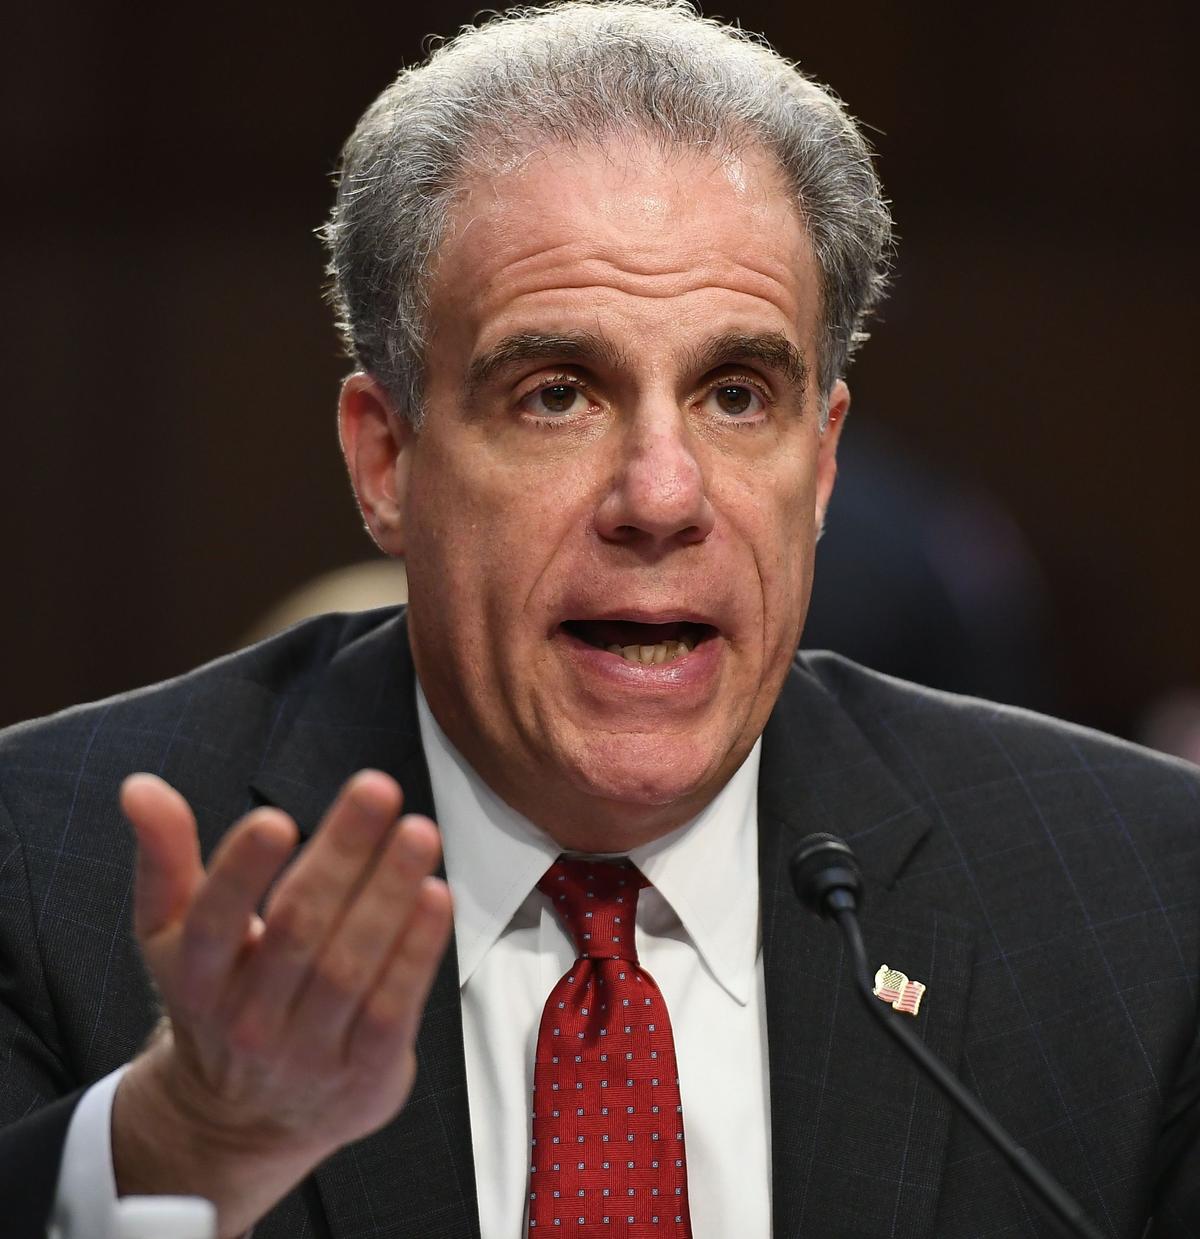 Justice Department Inspector General Michael Horowitz. (MANDEL NGAN/AFP/Getty Images)